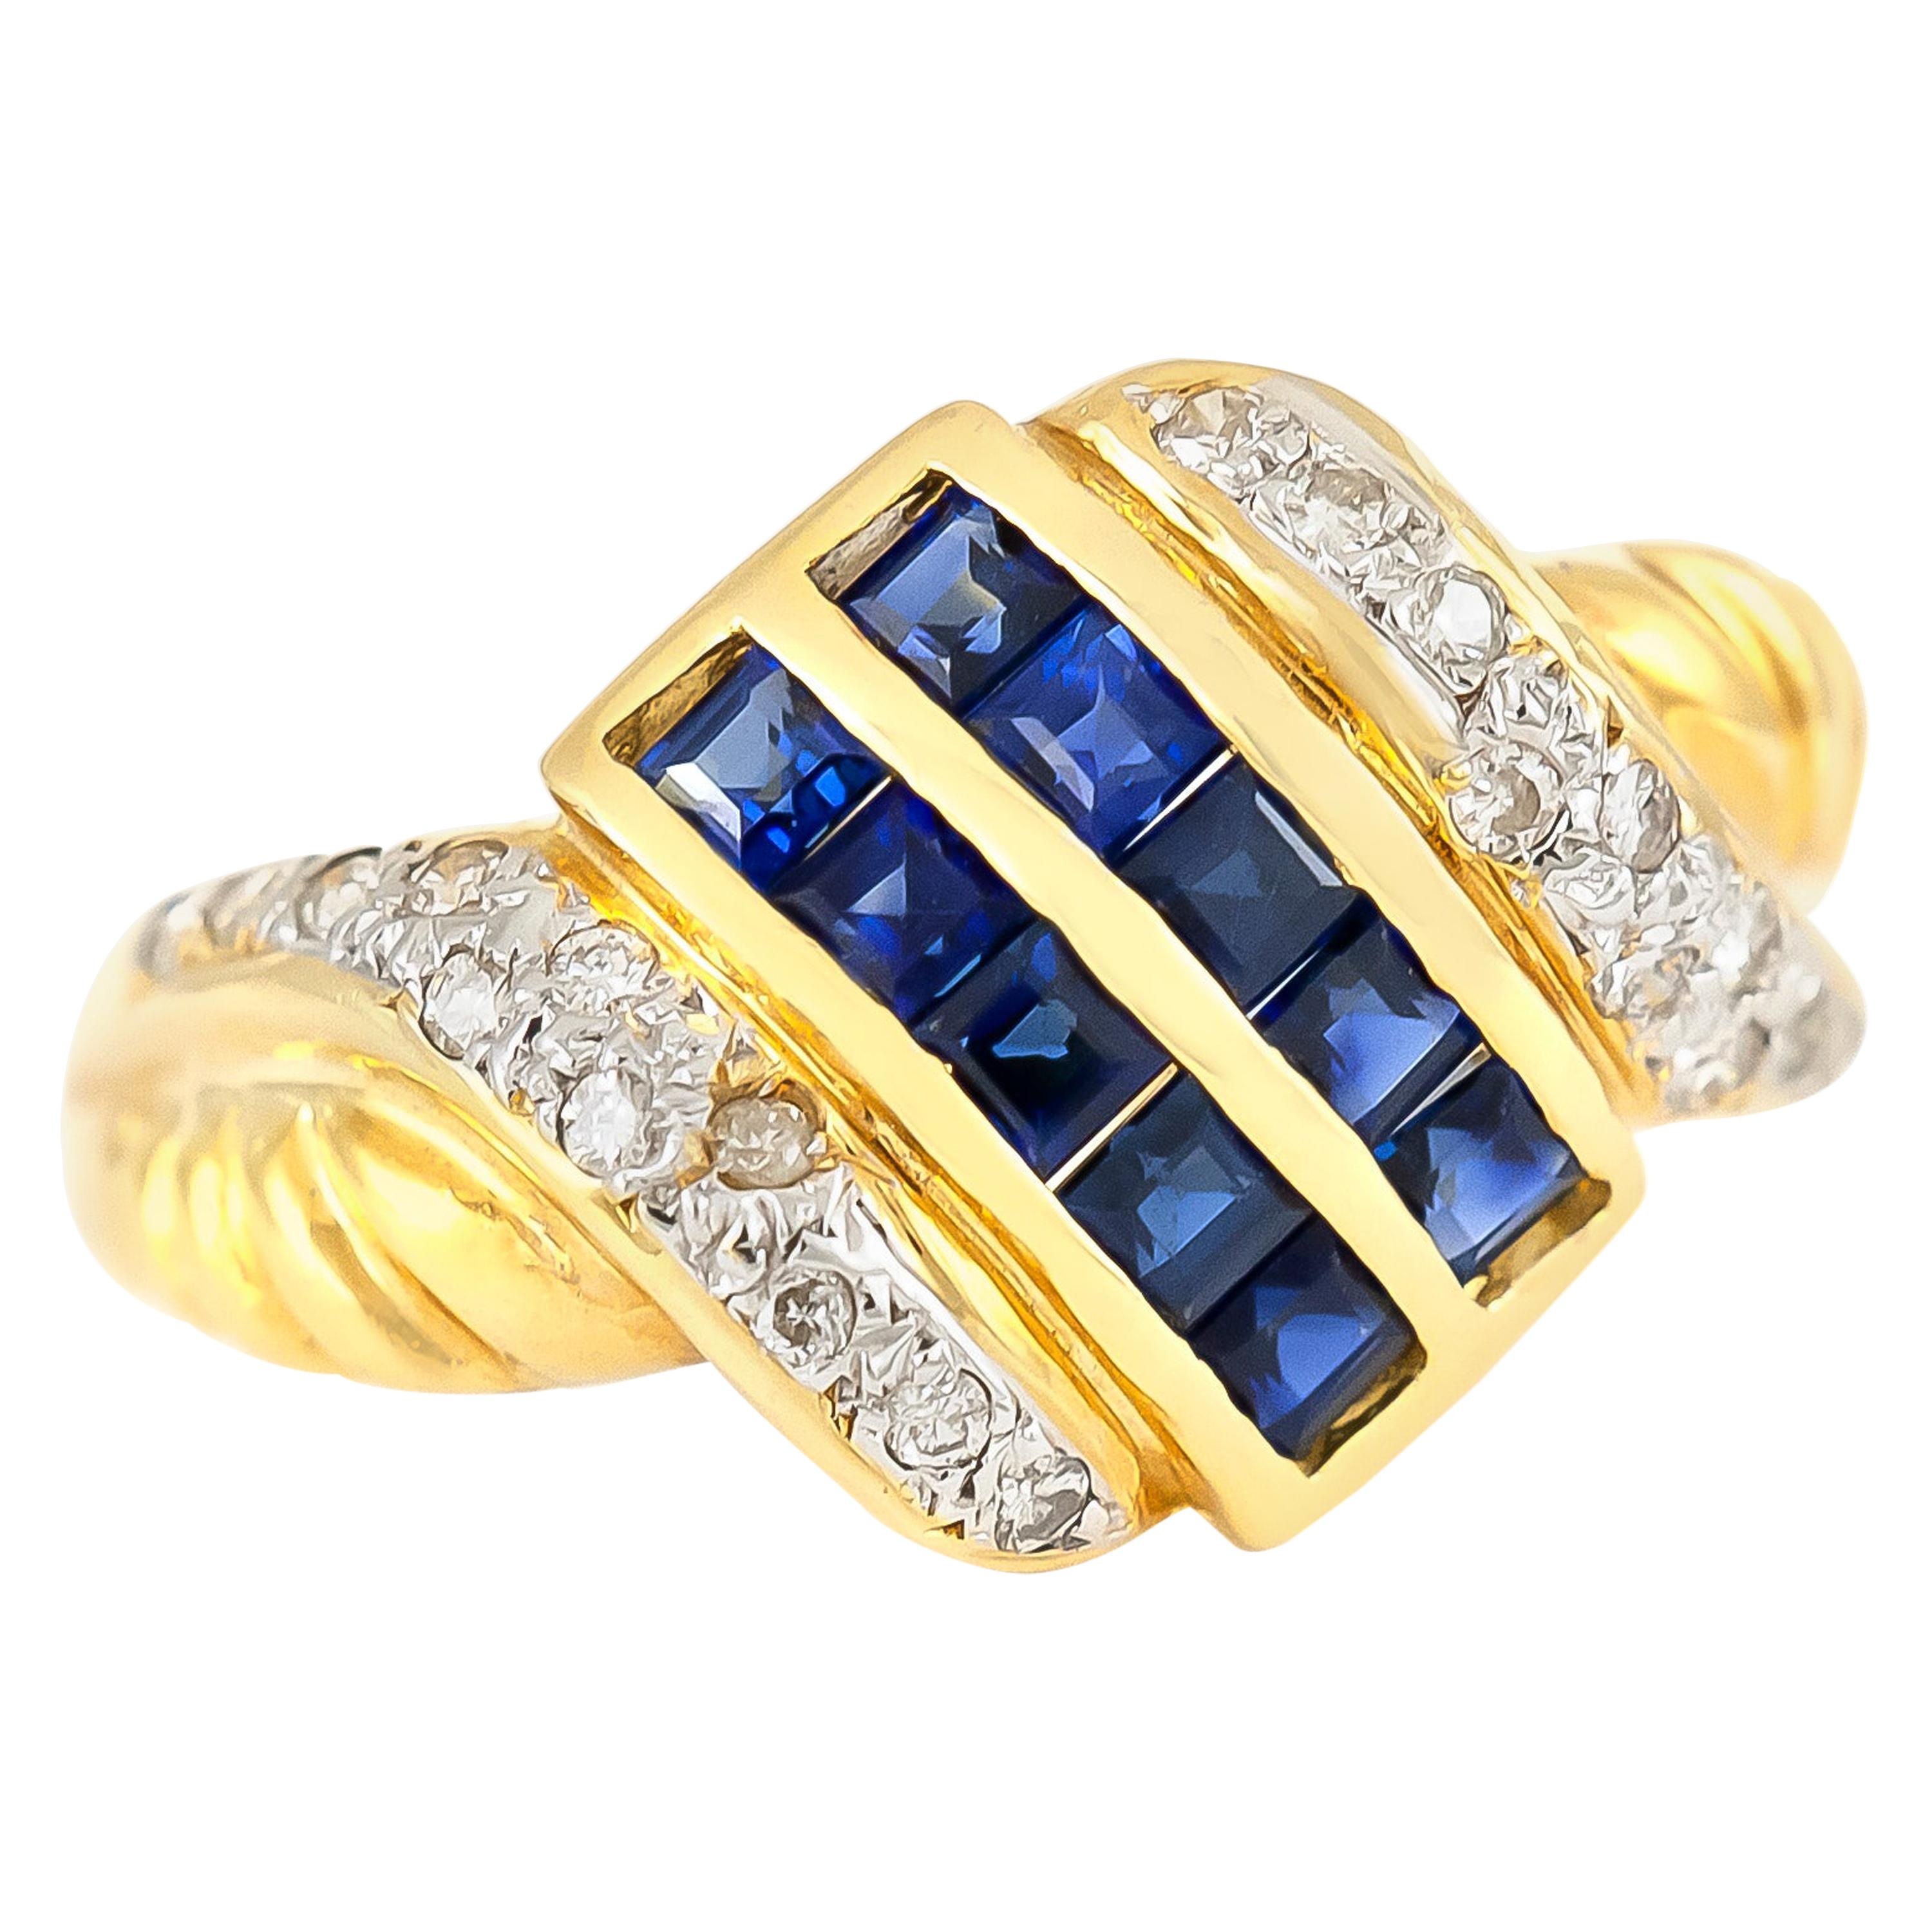 1980s Sapphire and Diamonds Ring